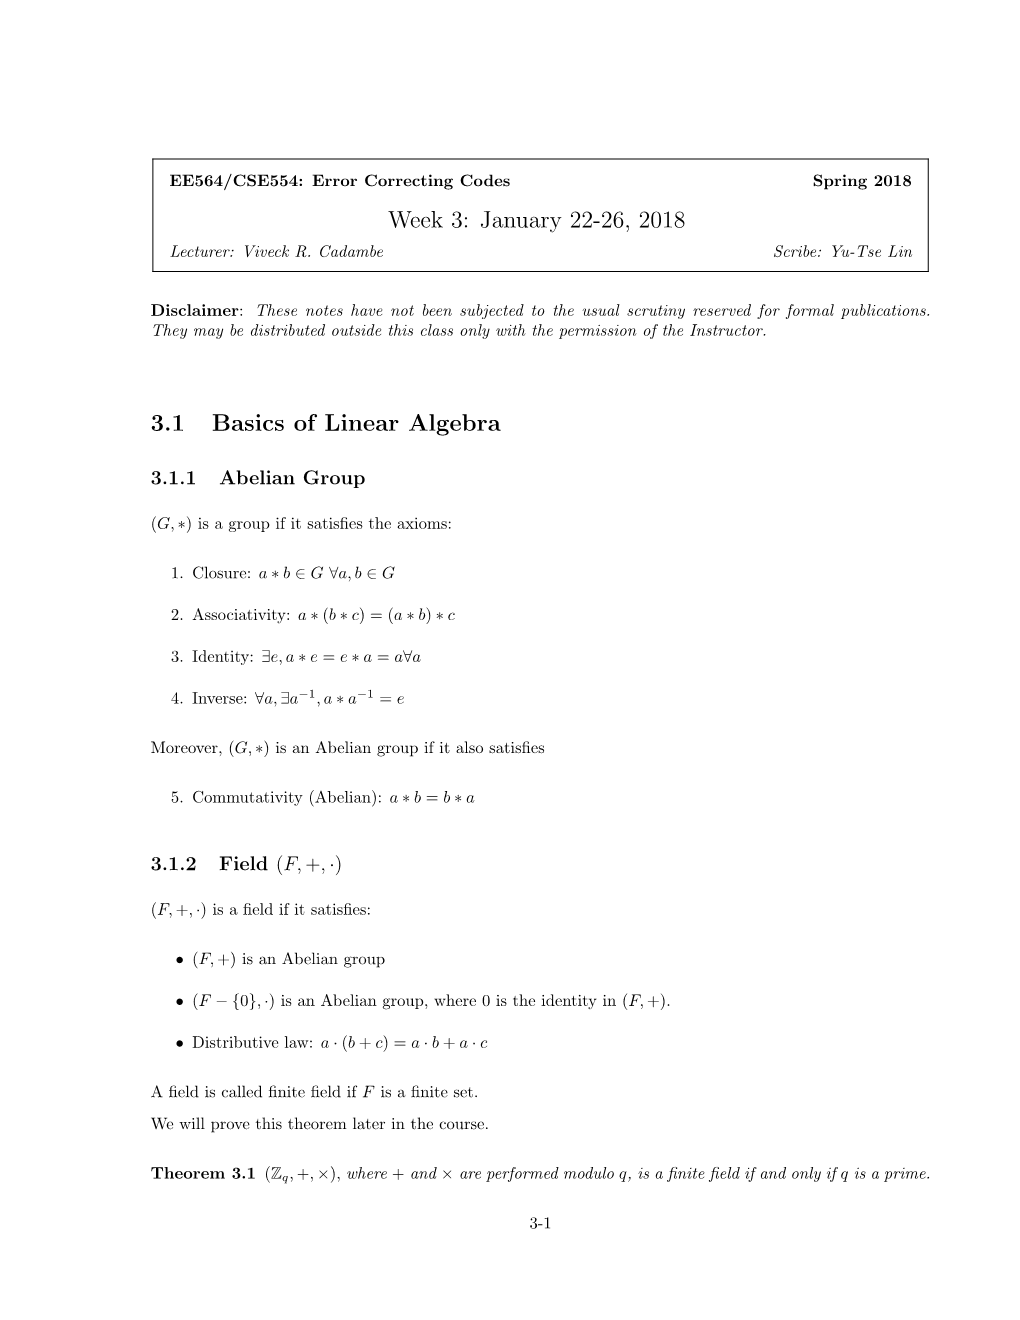 Week 3: January 22-26, 2018 3.1 Basics of Linear Algebra